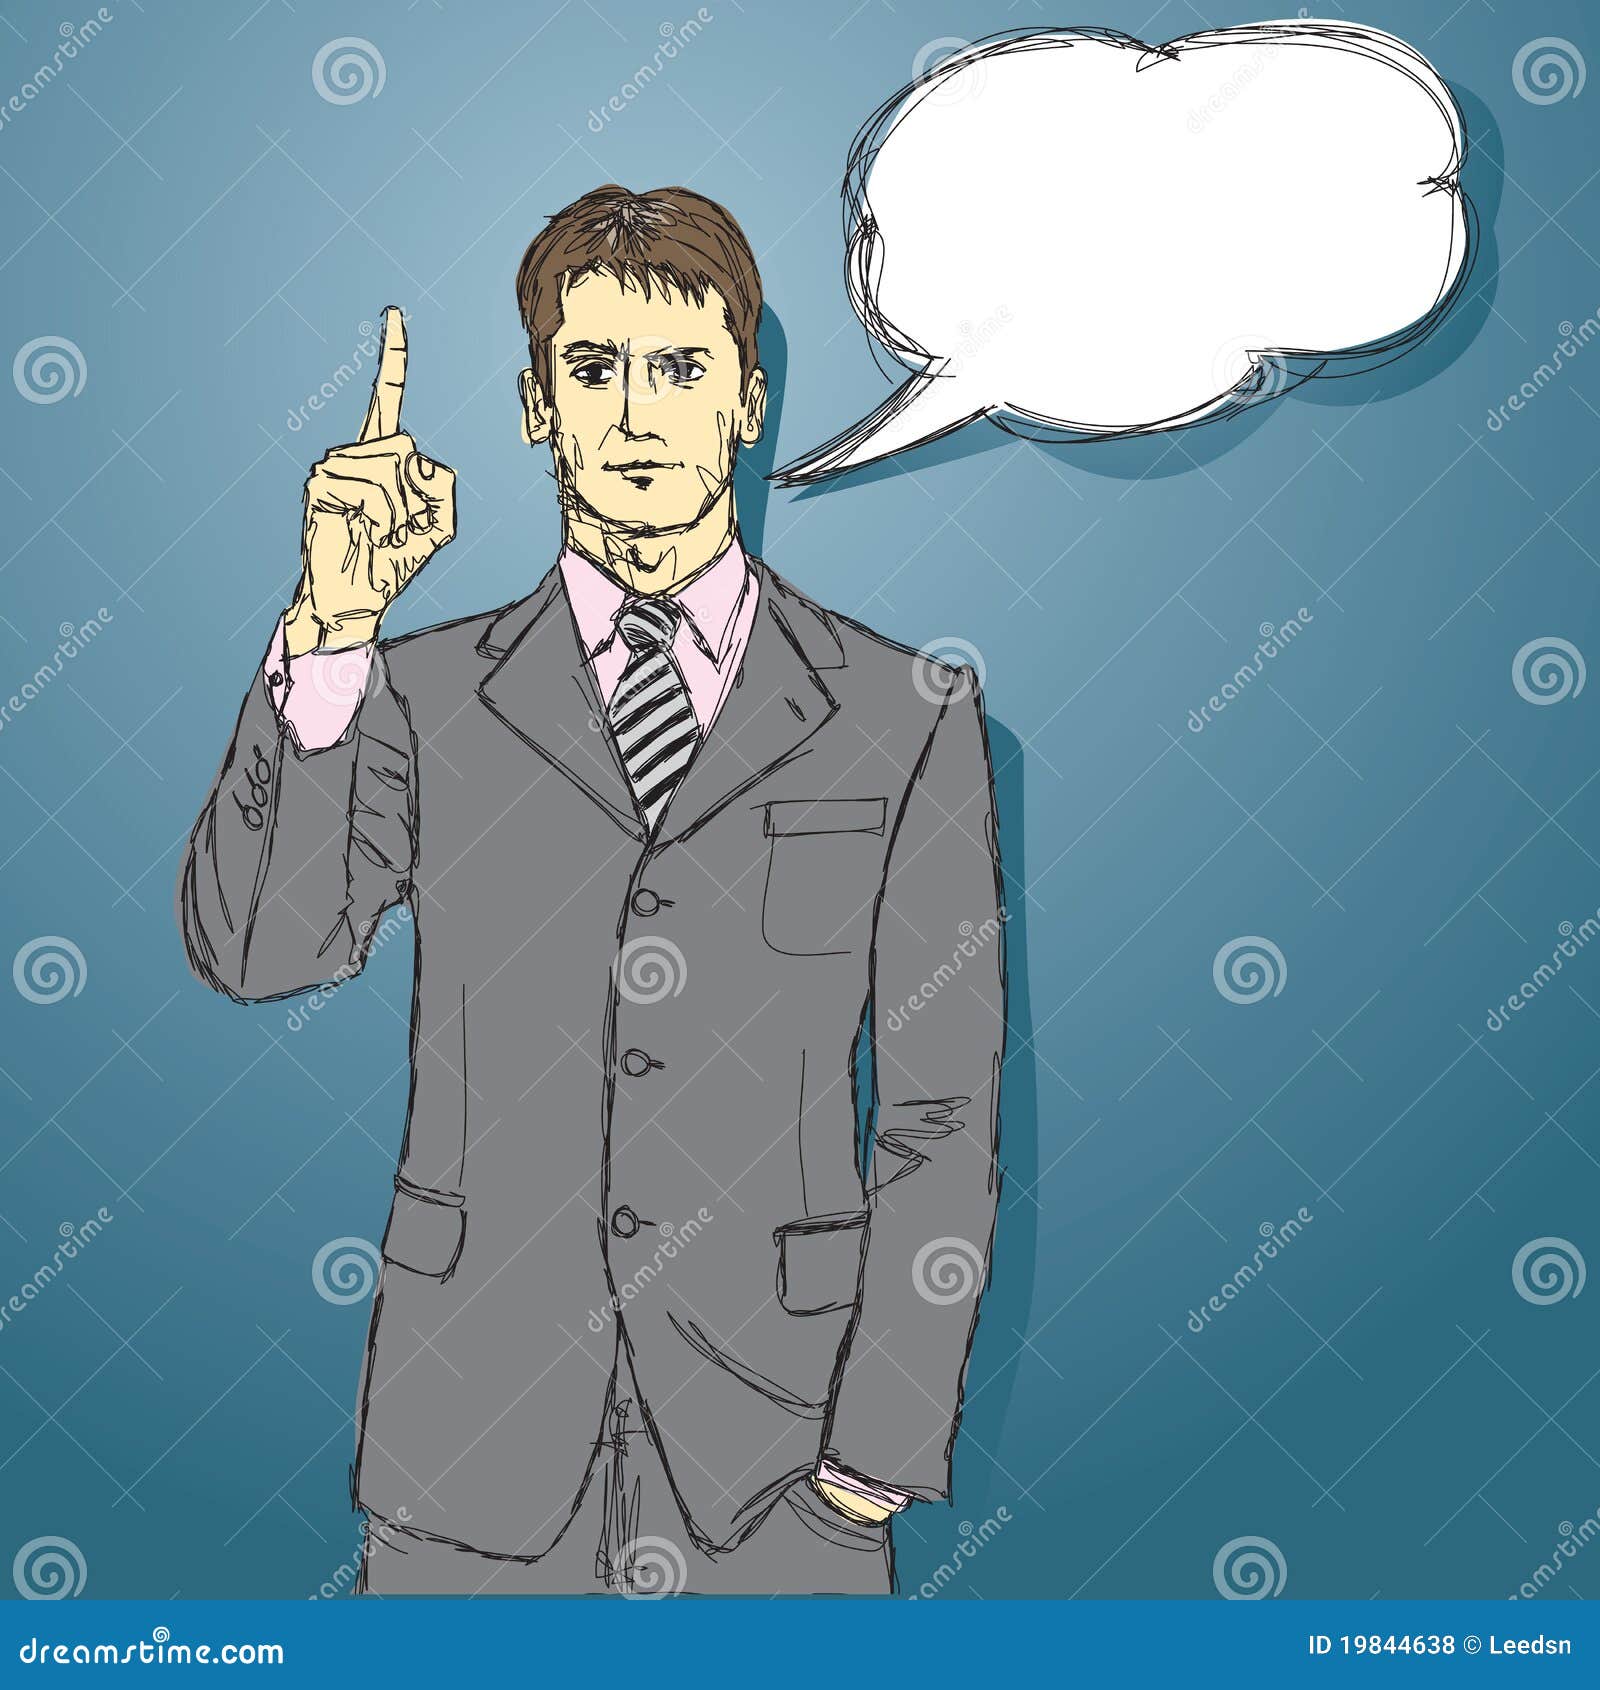 Businessman in suit stock vector. Illustration of elegant - 19844638